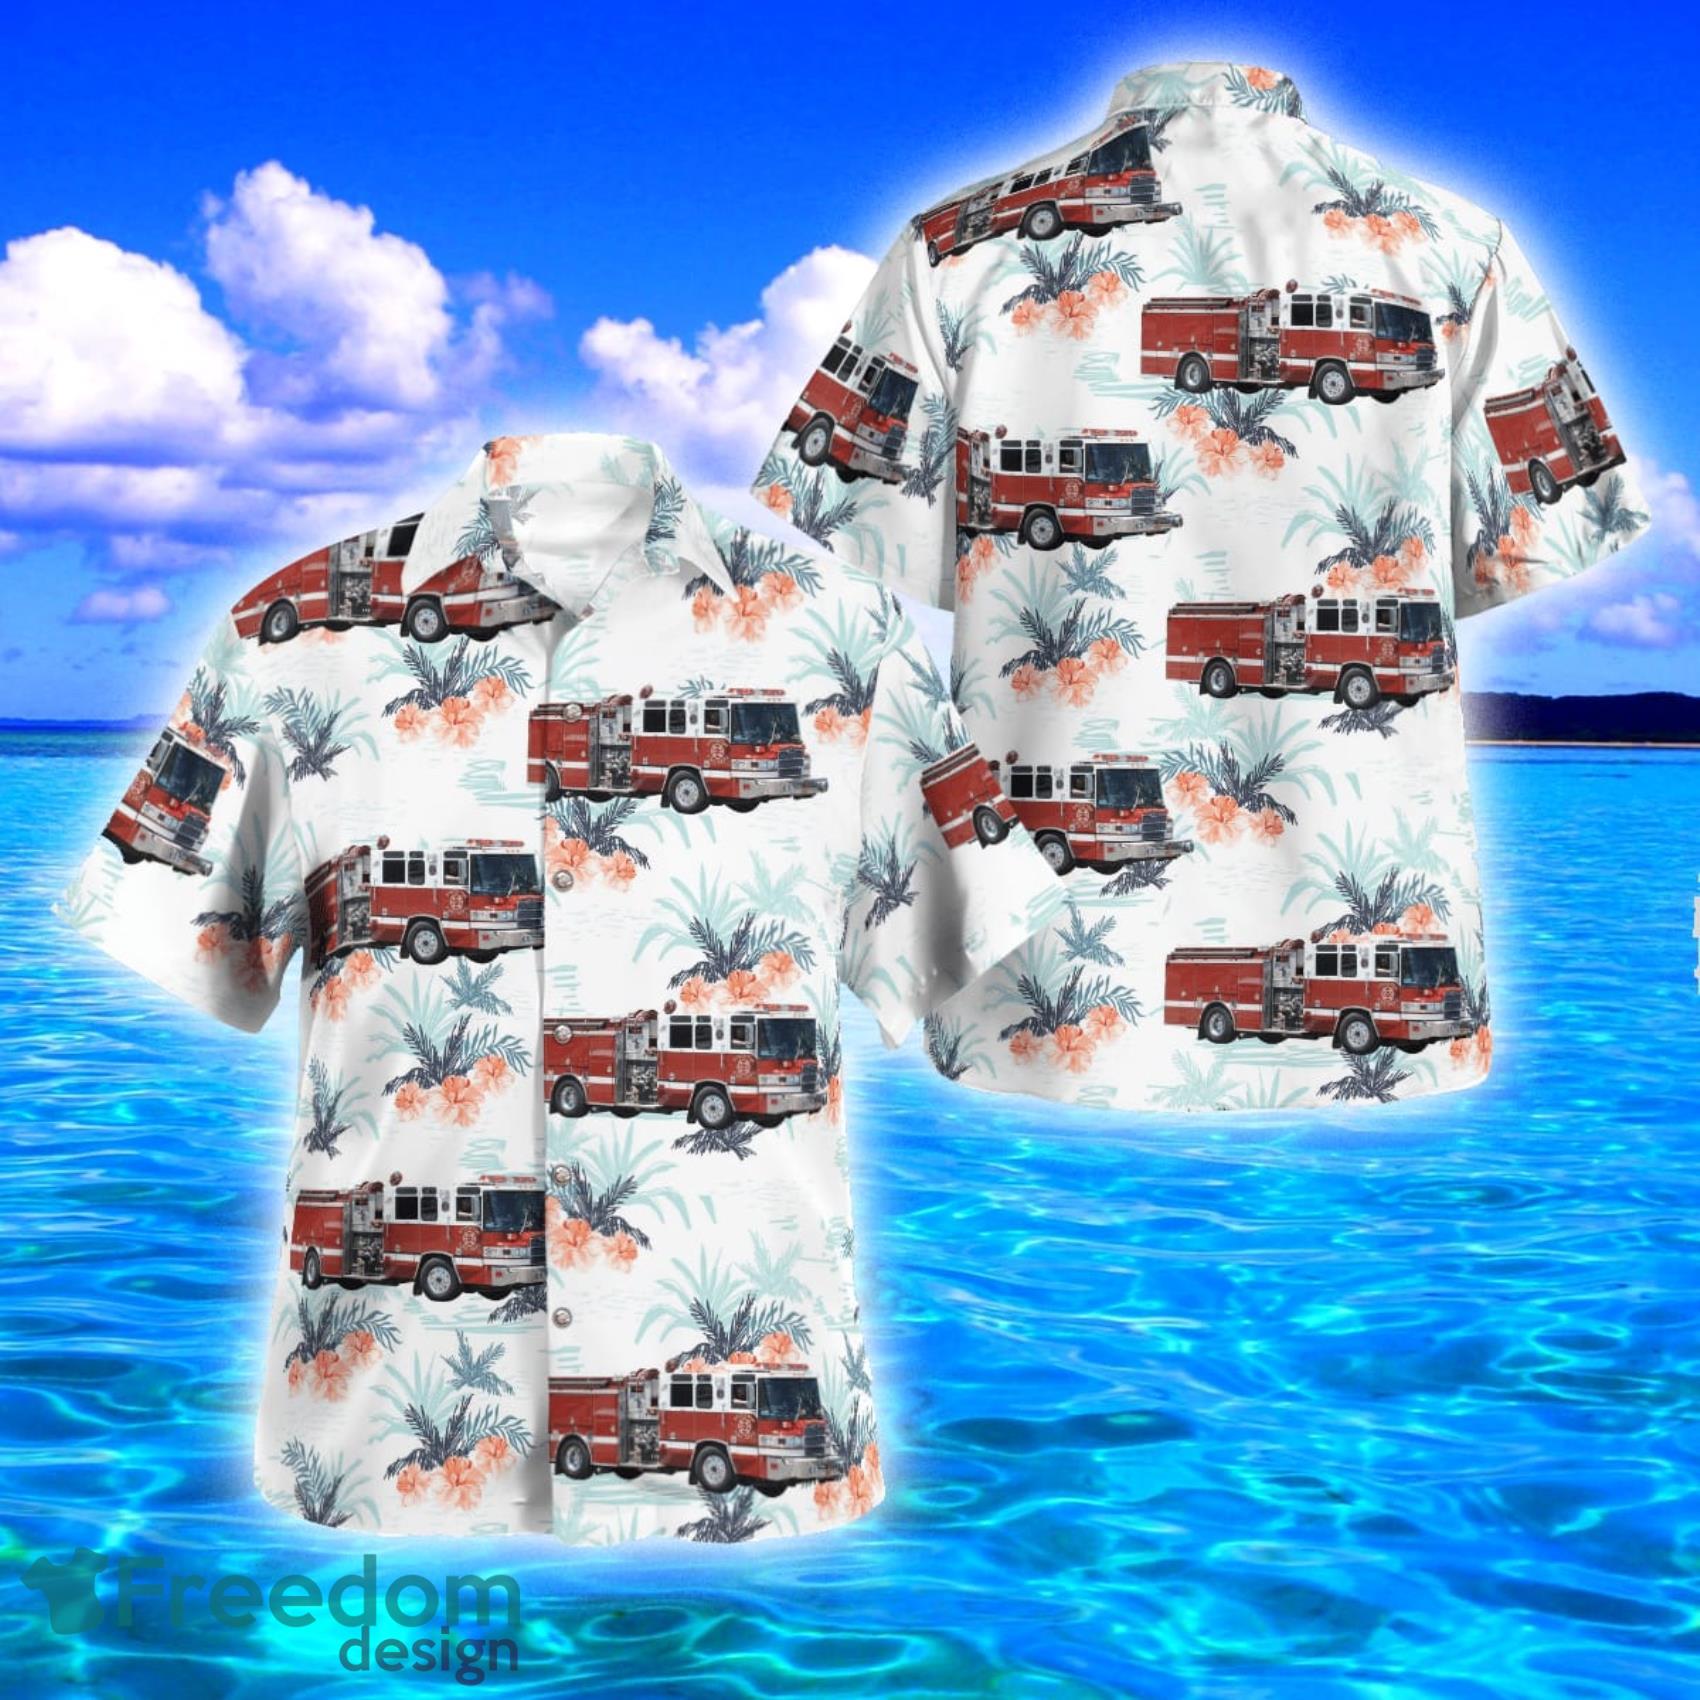 Blue Flame Hawaiian Shirt, Short-sleeved Shirt For , Print